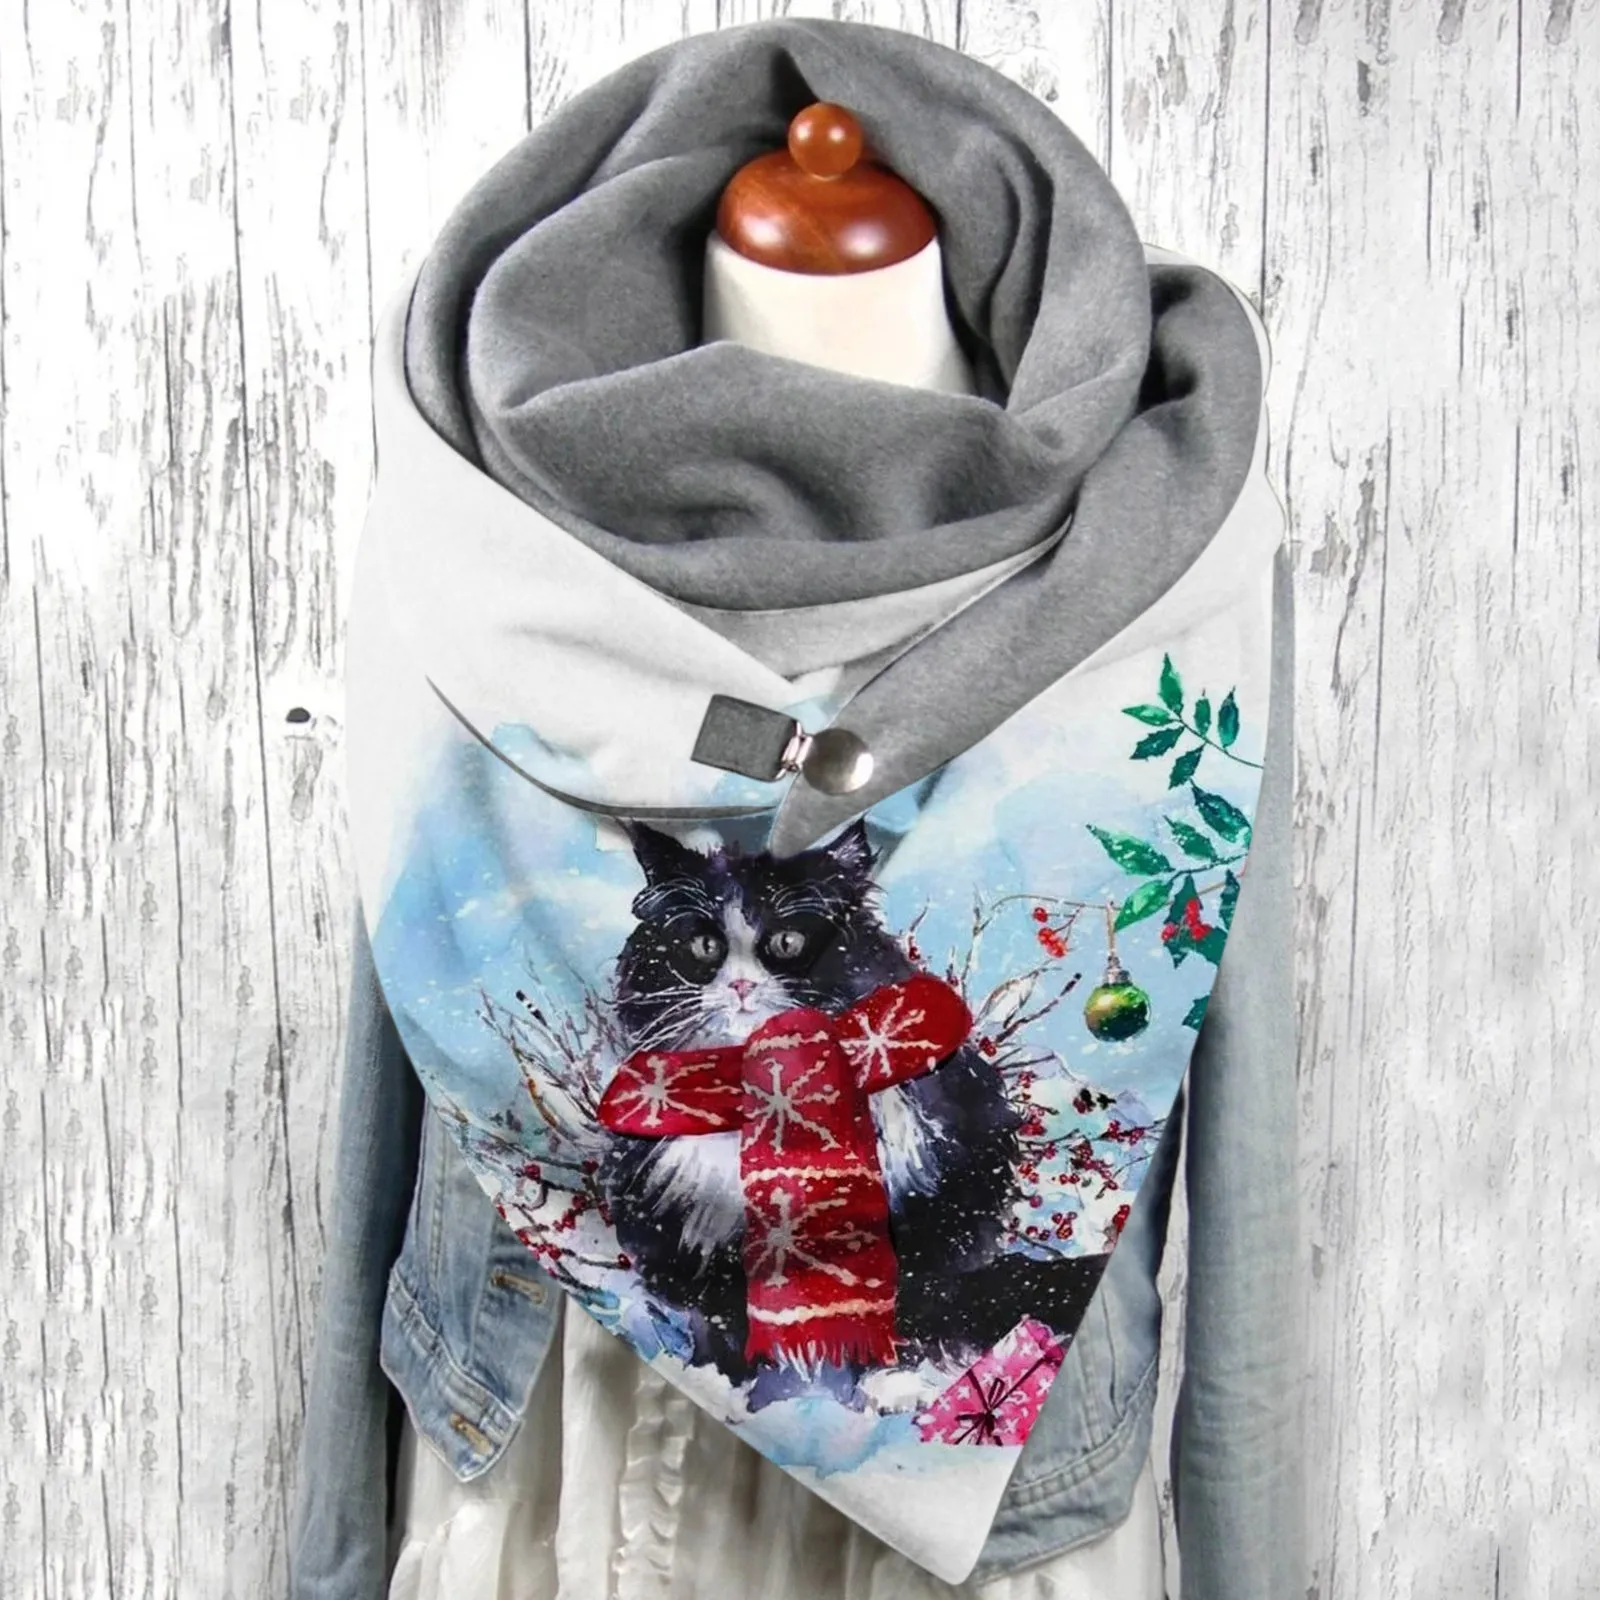 Universal Autumn Winter Warm Windproof Scarf Cat Prints Double-layer Buckle Scarf New Fashion Women Bufanda шарф женский mens white scarf